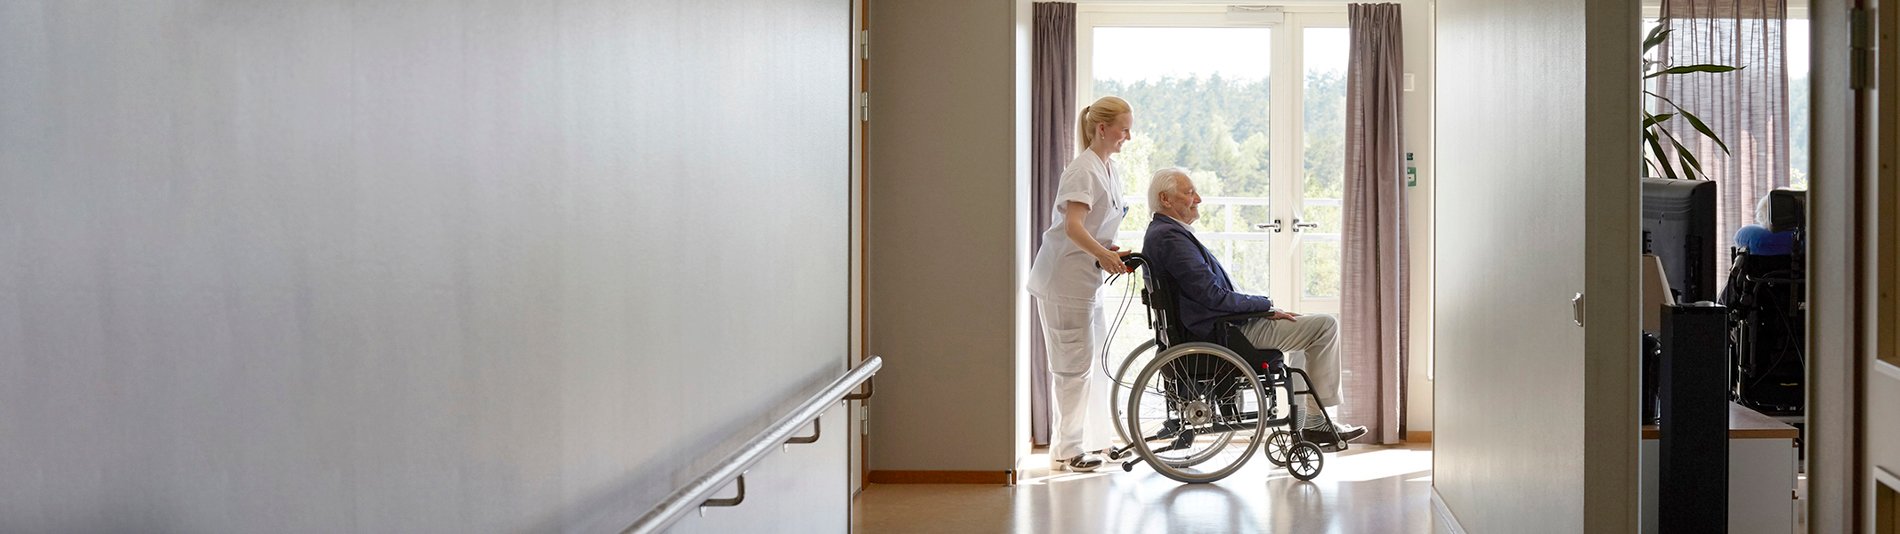 Pflegerin schiebt Rollstuhl über Gang am Fenster